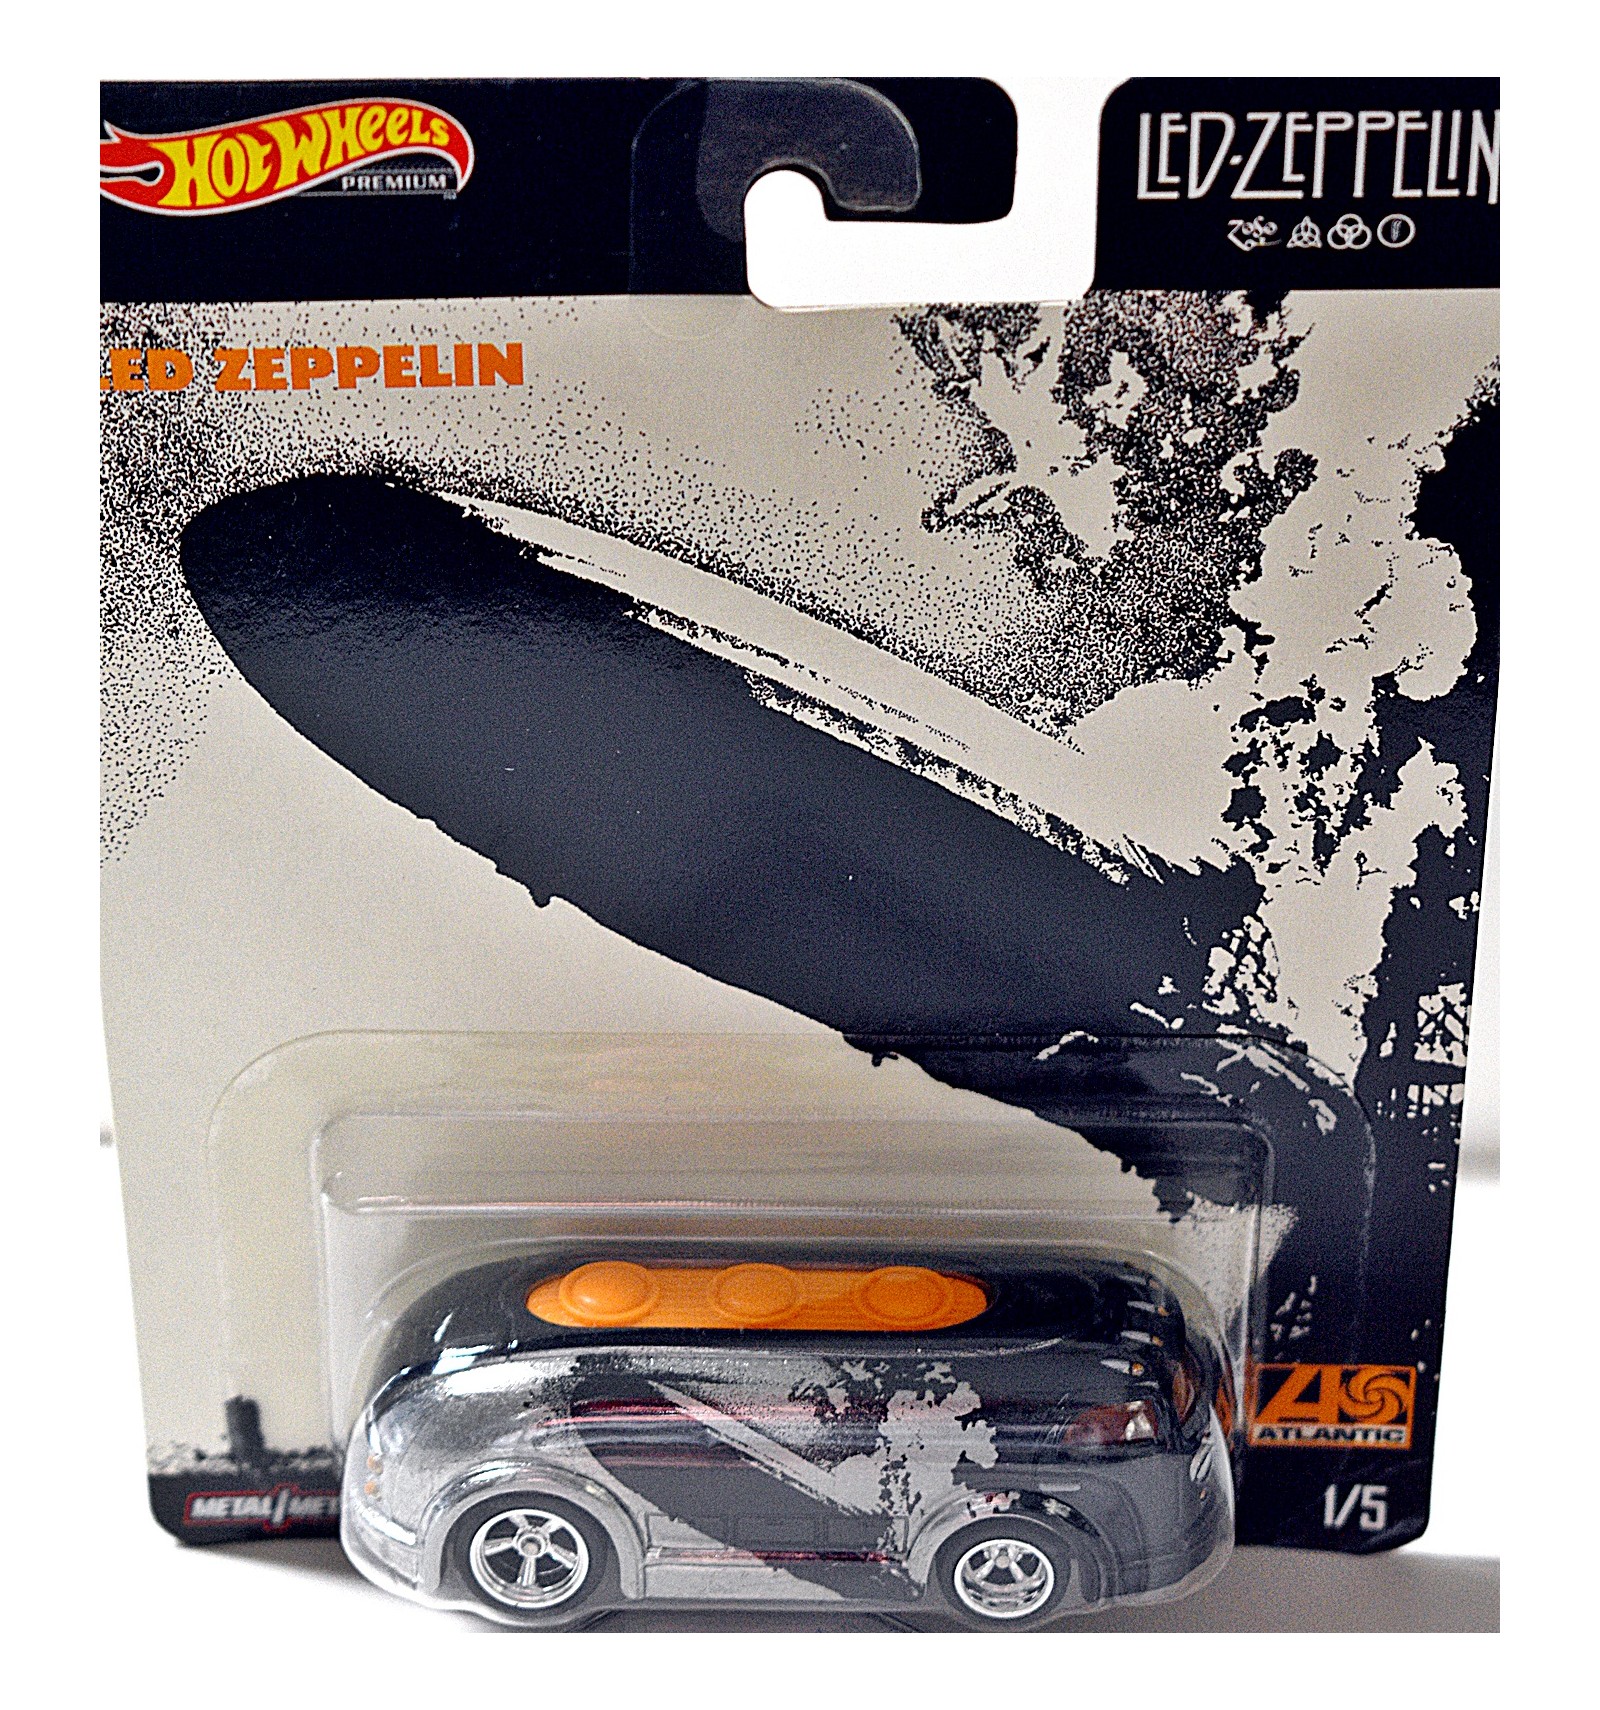 Hot Wheels 2019 Pop Culture 1/64 Led Zeppelin Diecast Cars Set of 5 DLB45-946E